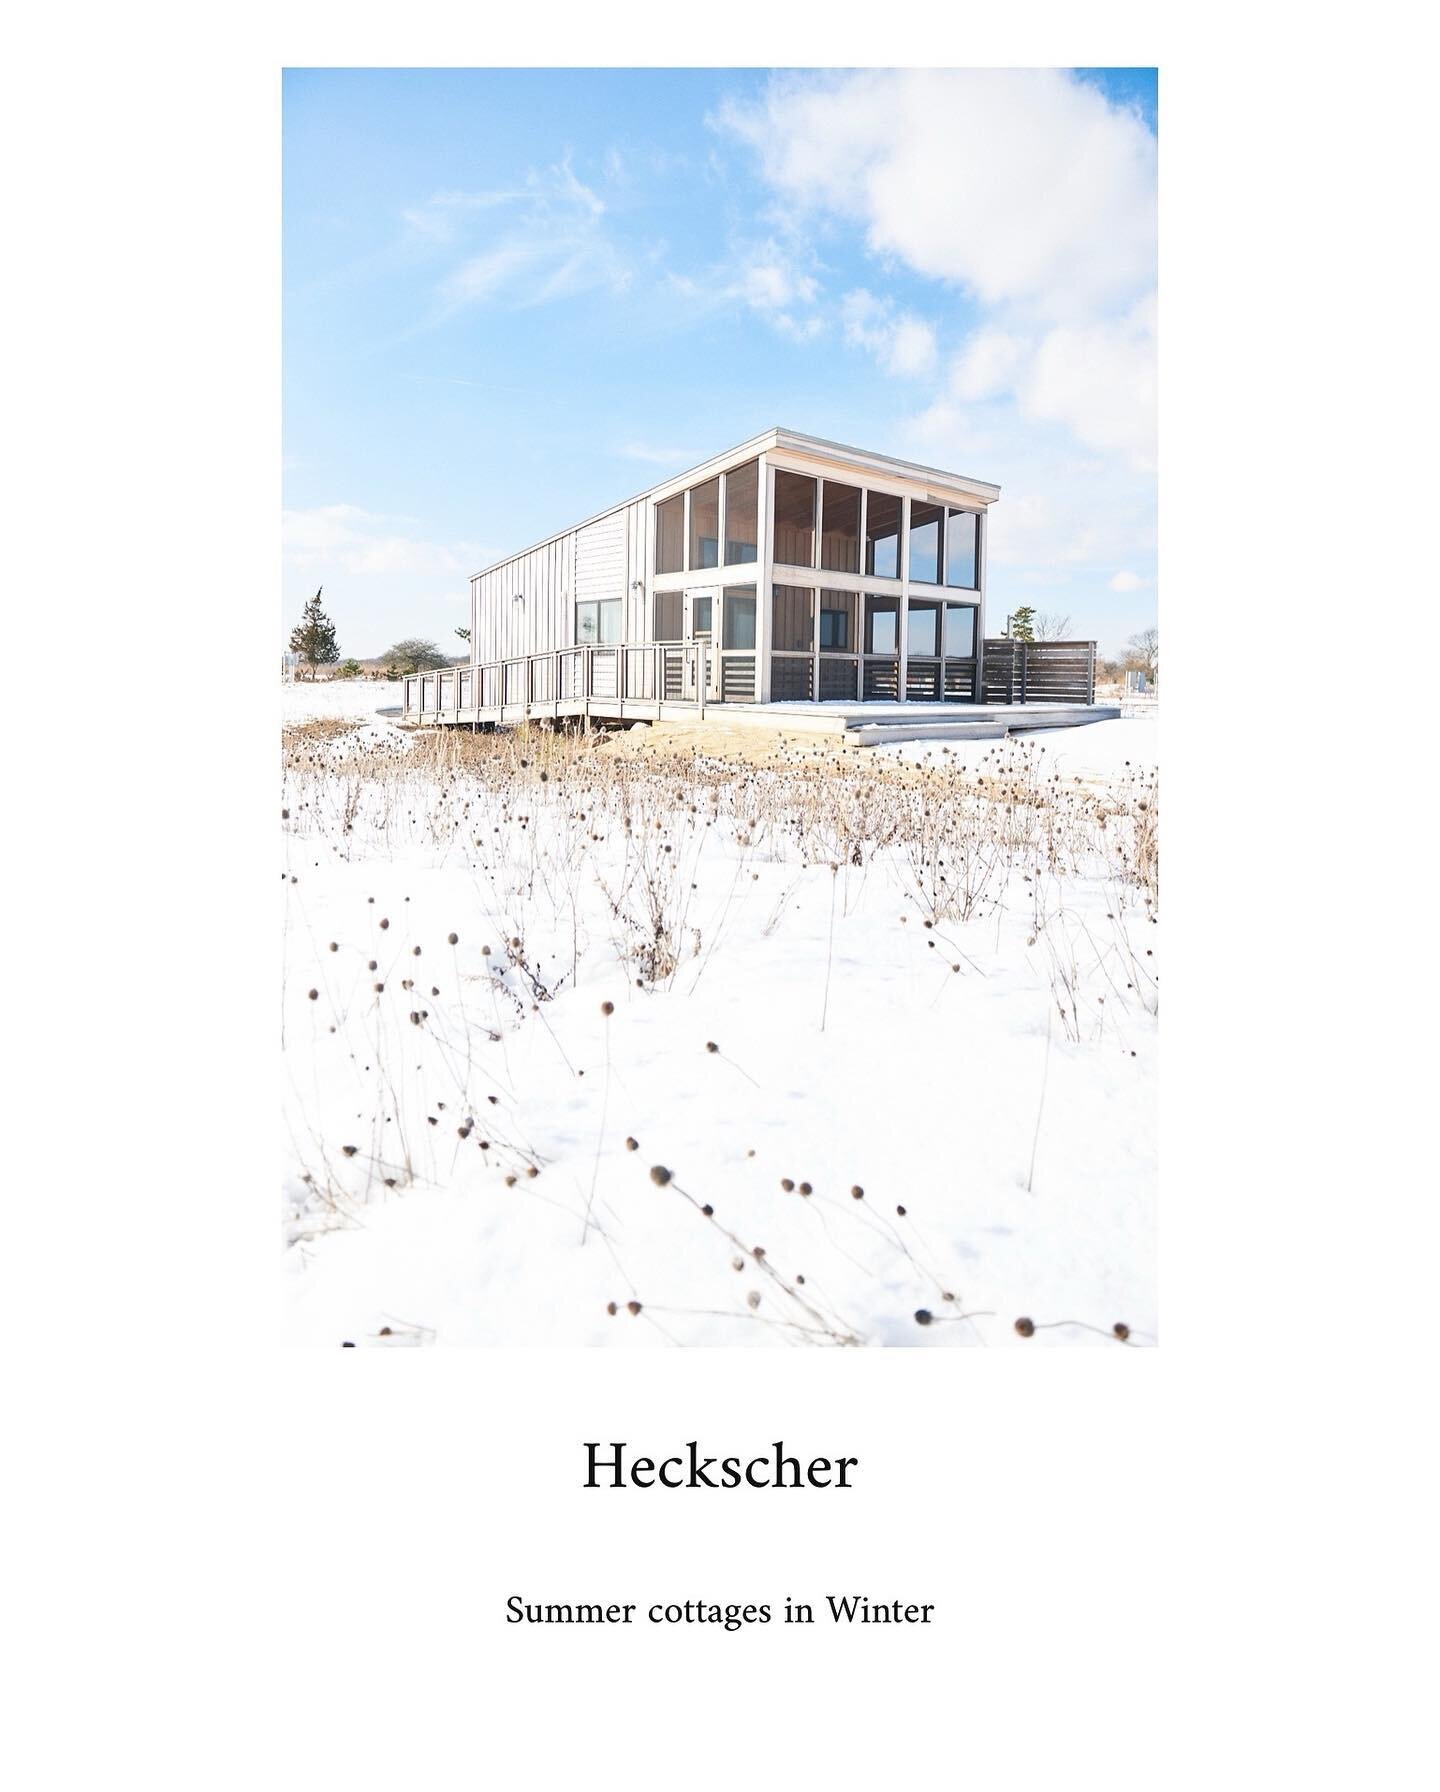 ..Winter field trip to the Cottages at Heckscher State Park, East Islip 
.
.
.
. #heckscherstateparkcottages #longisland #winter #landscapephotography